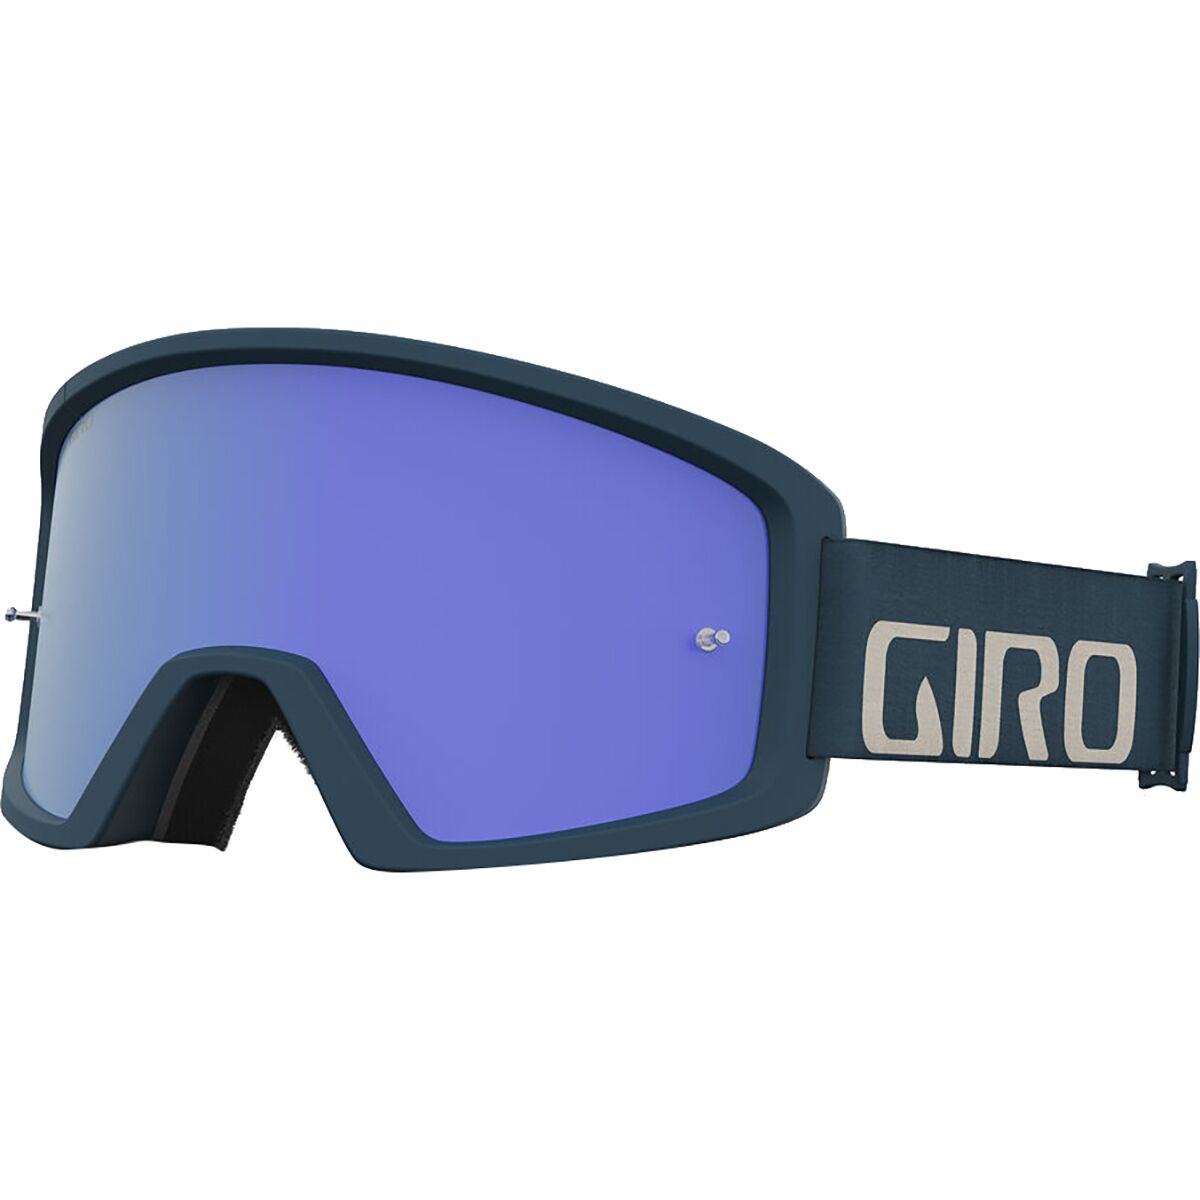 Giro Blok MTB Goggles Harbor Blue Sandstone/Grey Cobalt Lens, One Size